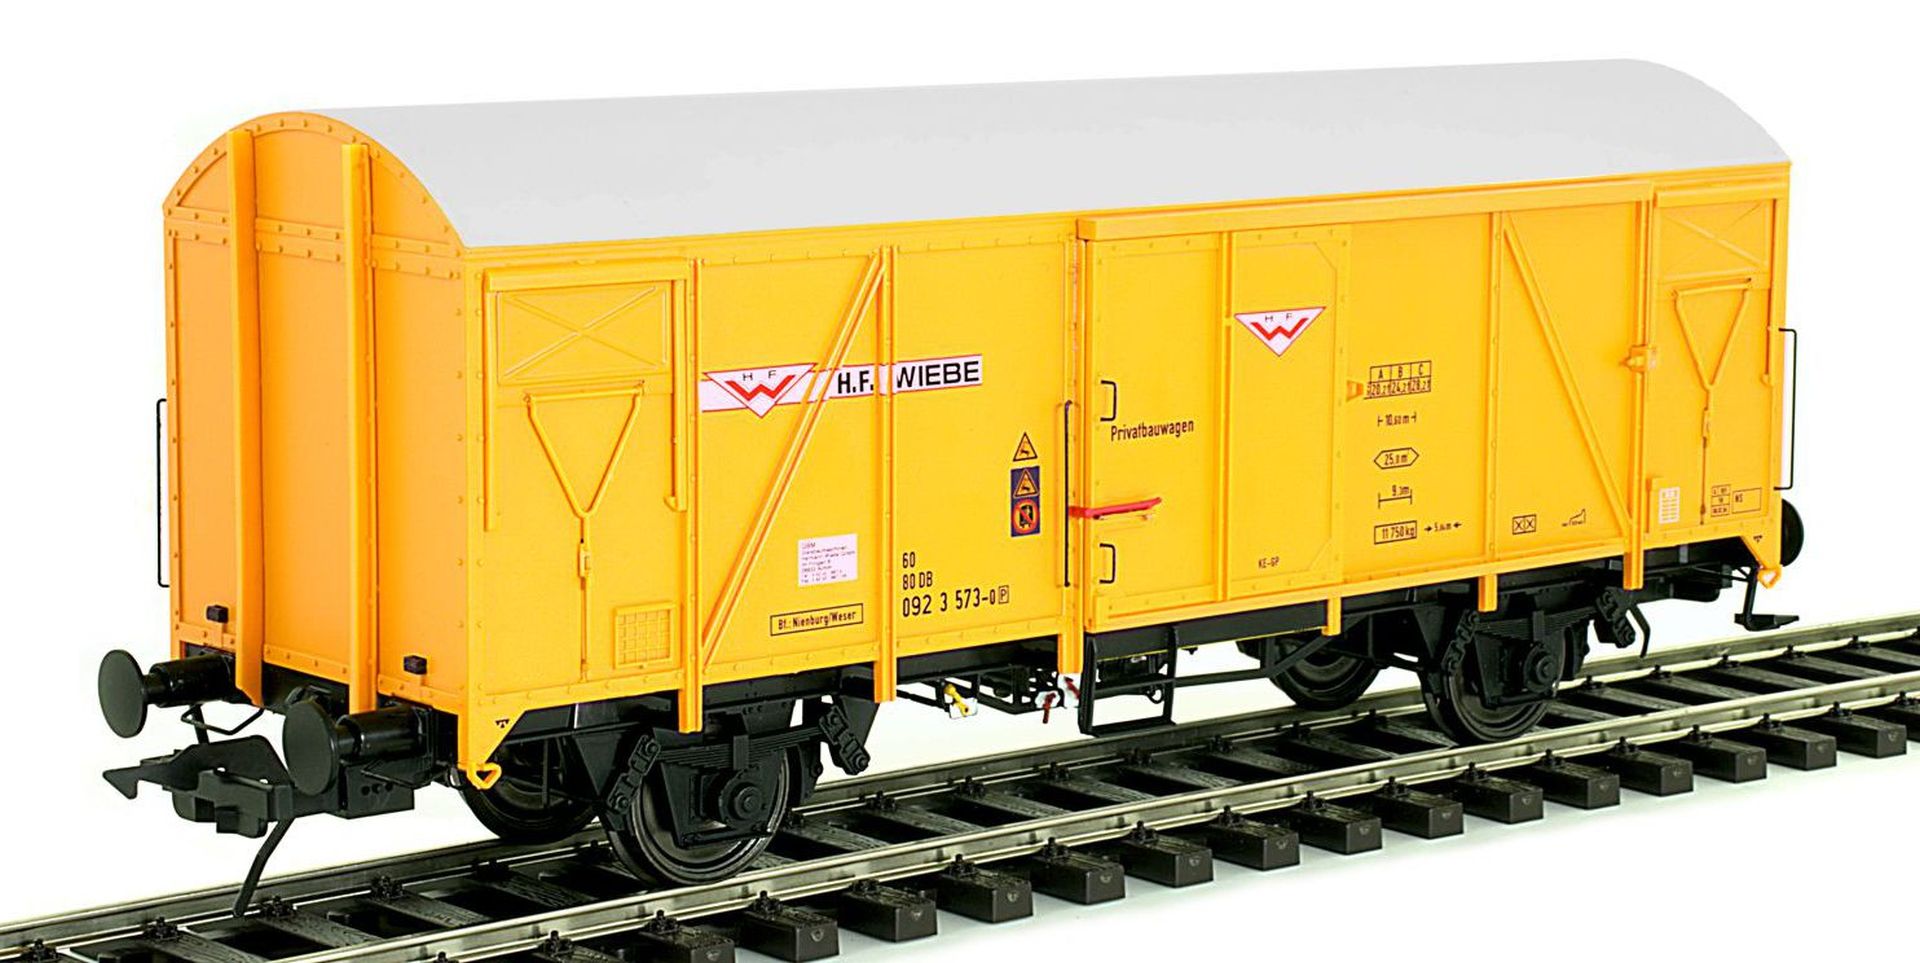 Lenz 42234-08 - Bahndienstwagen Gls 205, Wiebe, Ep.V, 3 573-0 [P]